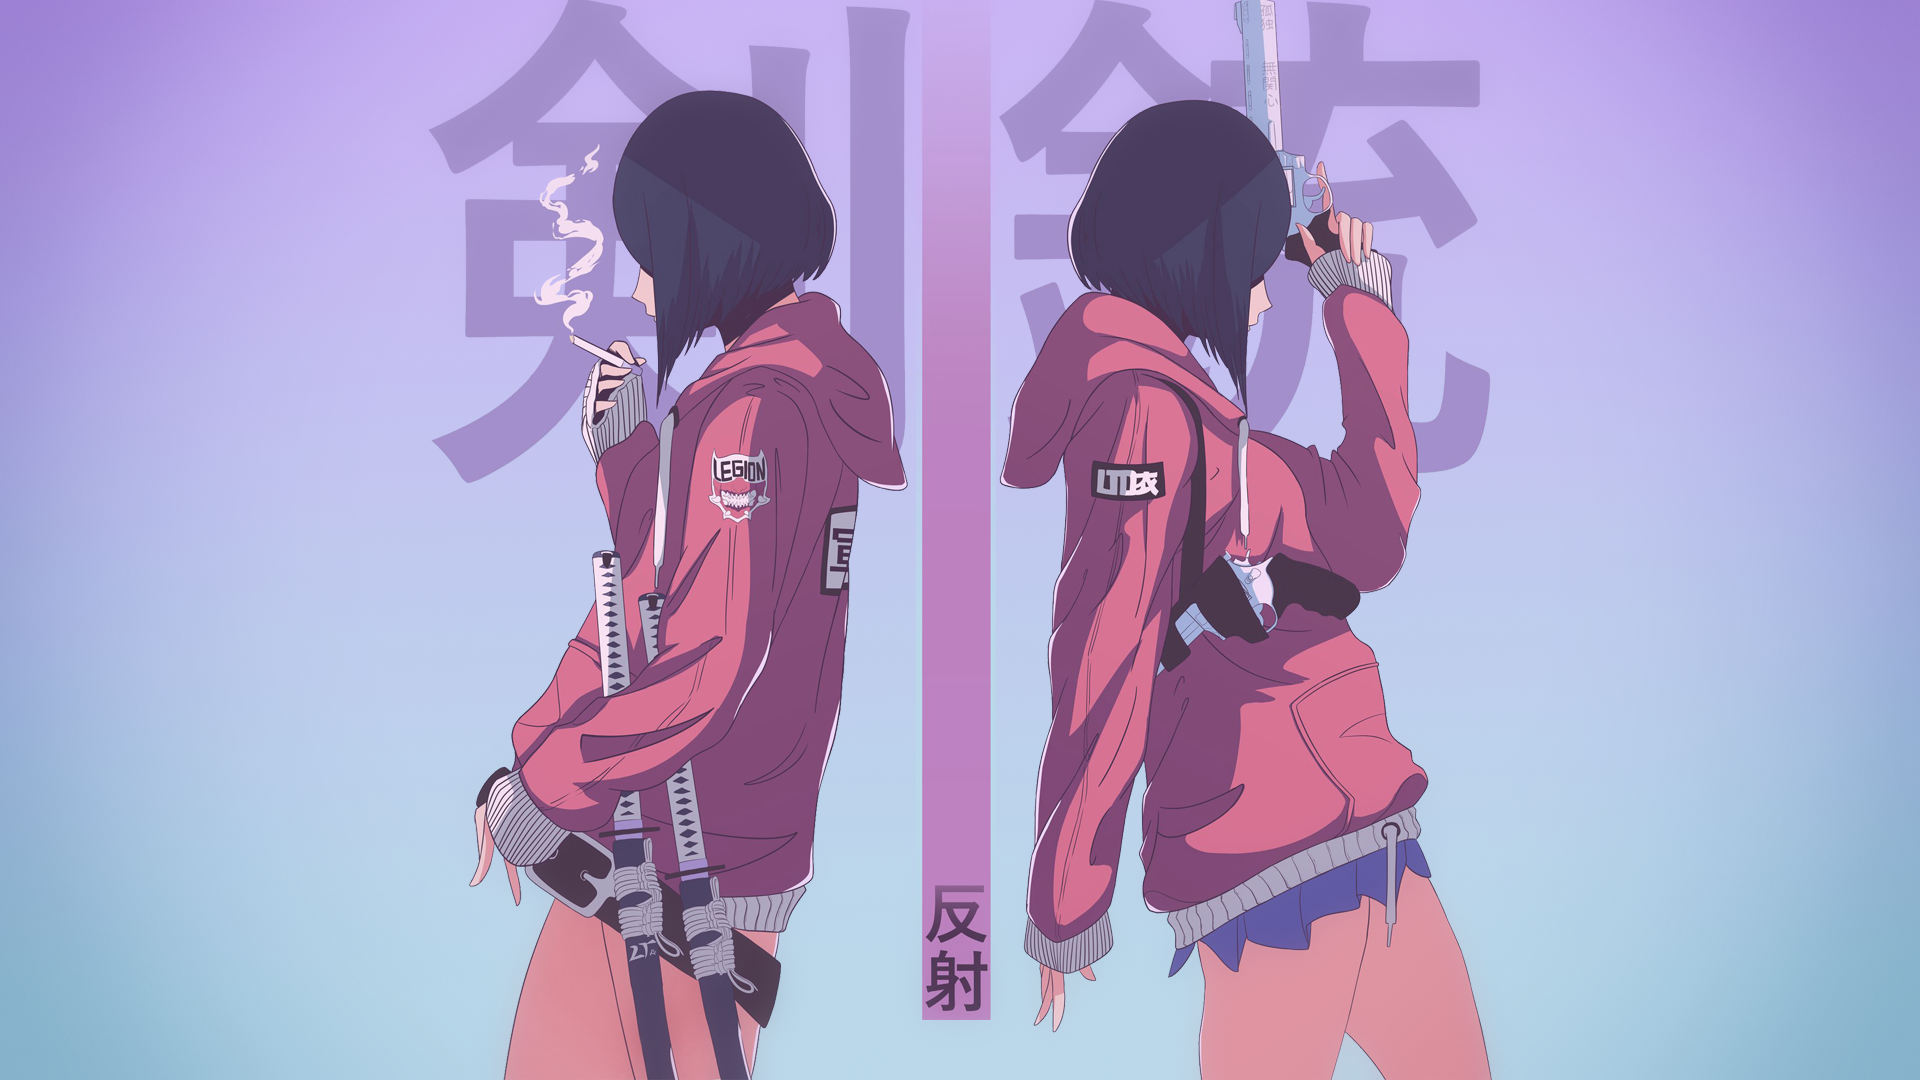 Anime Anime Girls Illustration Fan Art Minimalism Texture Katana Revolver Japanese Art Logo Futurist 1920x1080